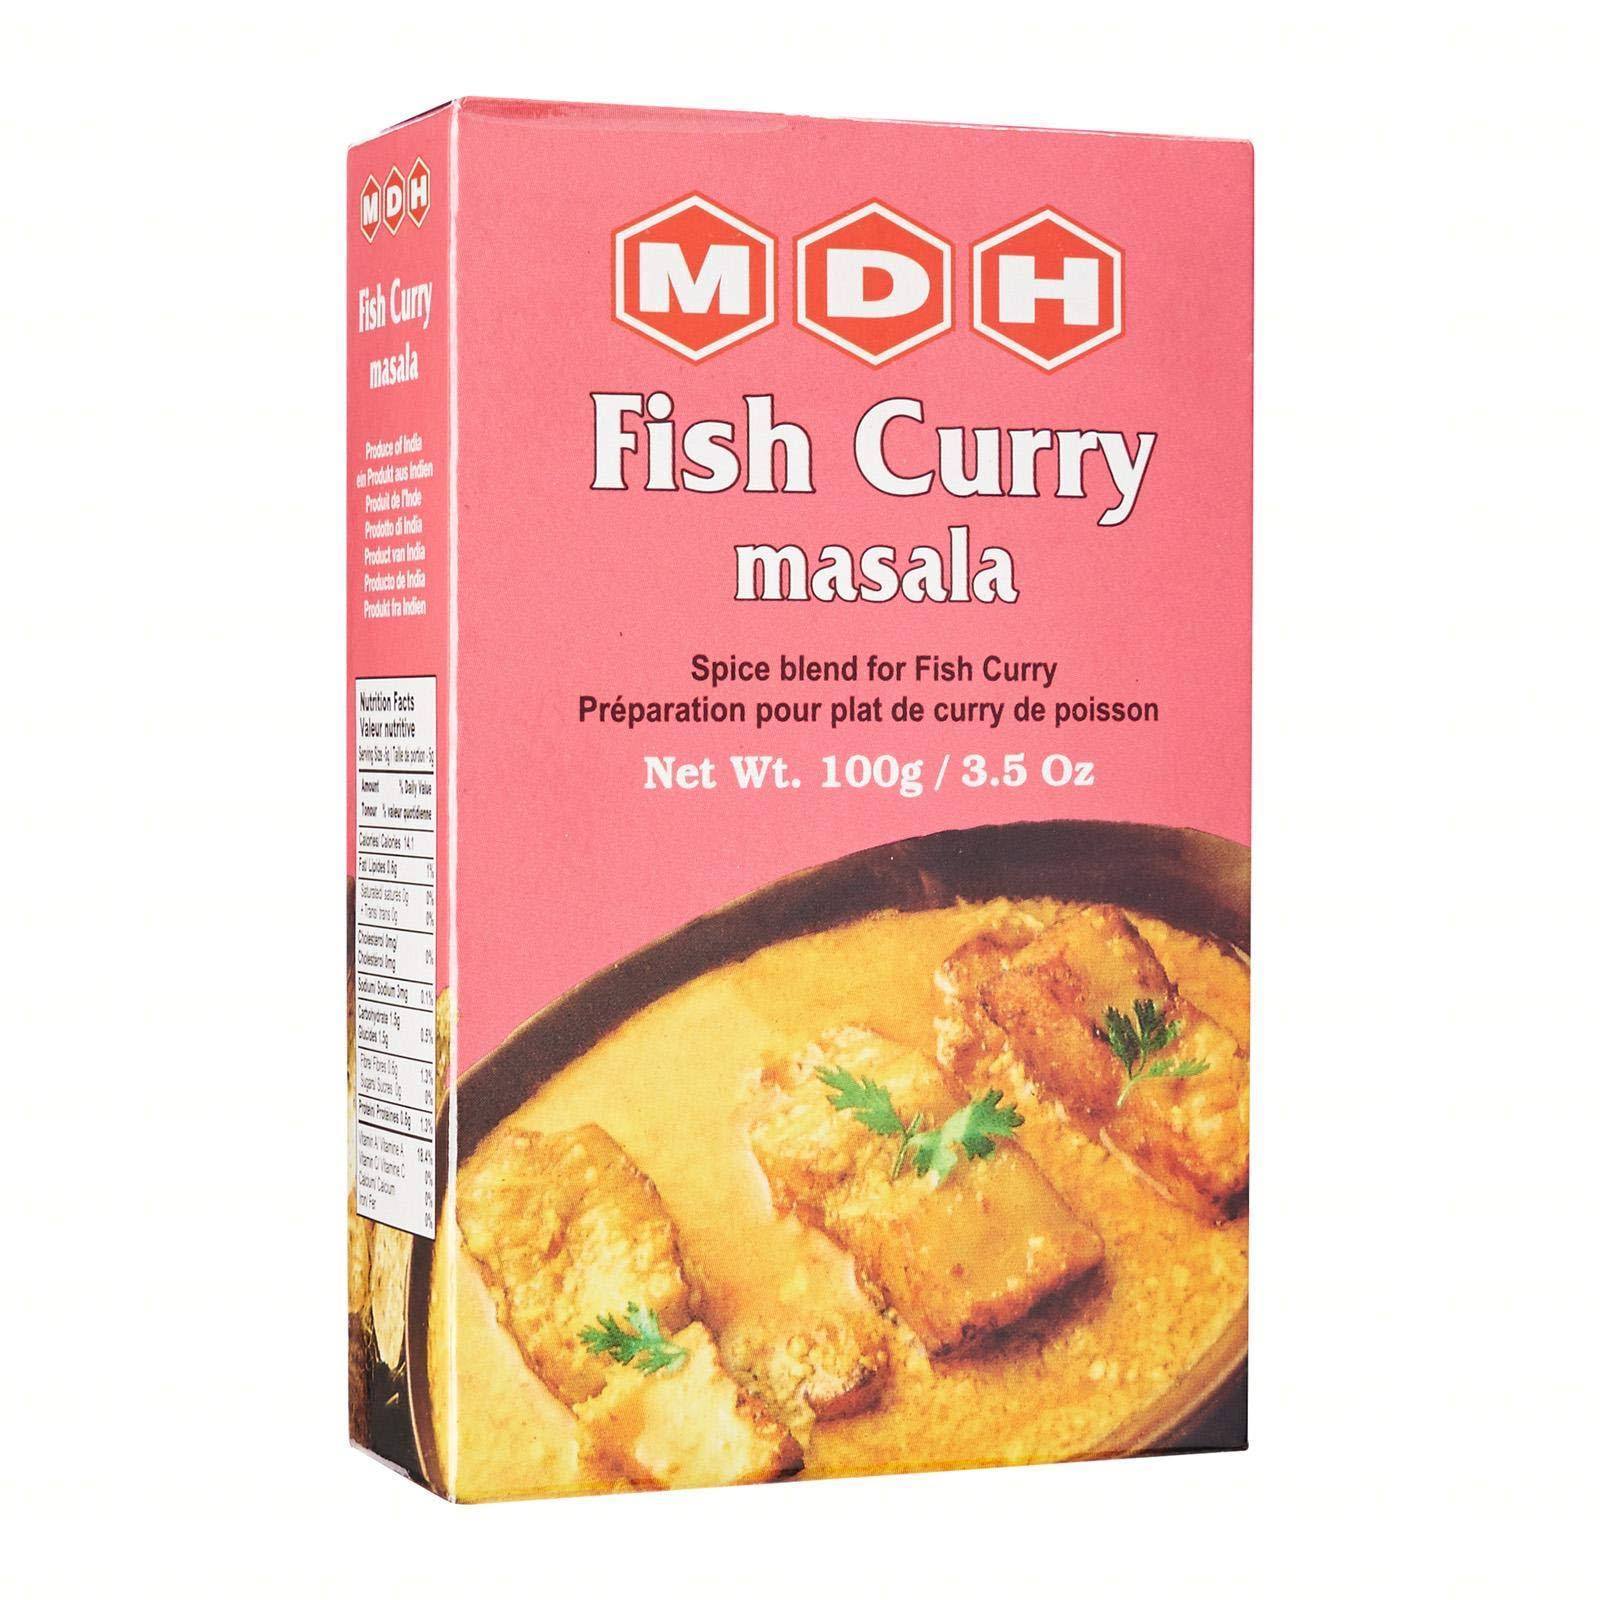 MDH Fish Curry Masala - 3.5oz